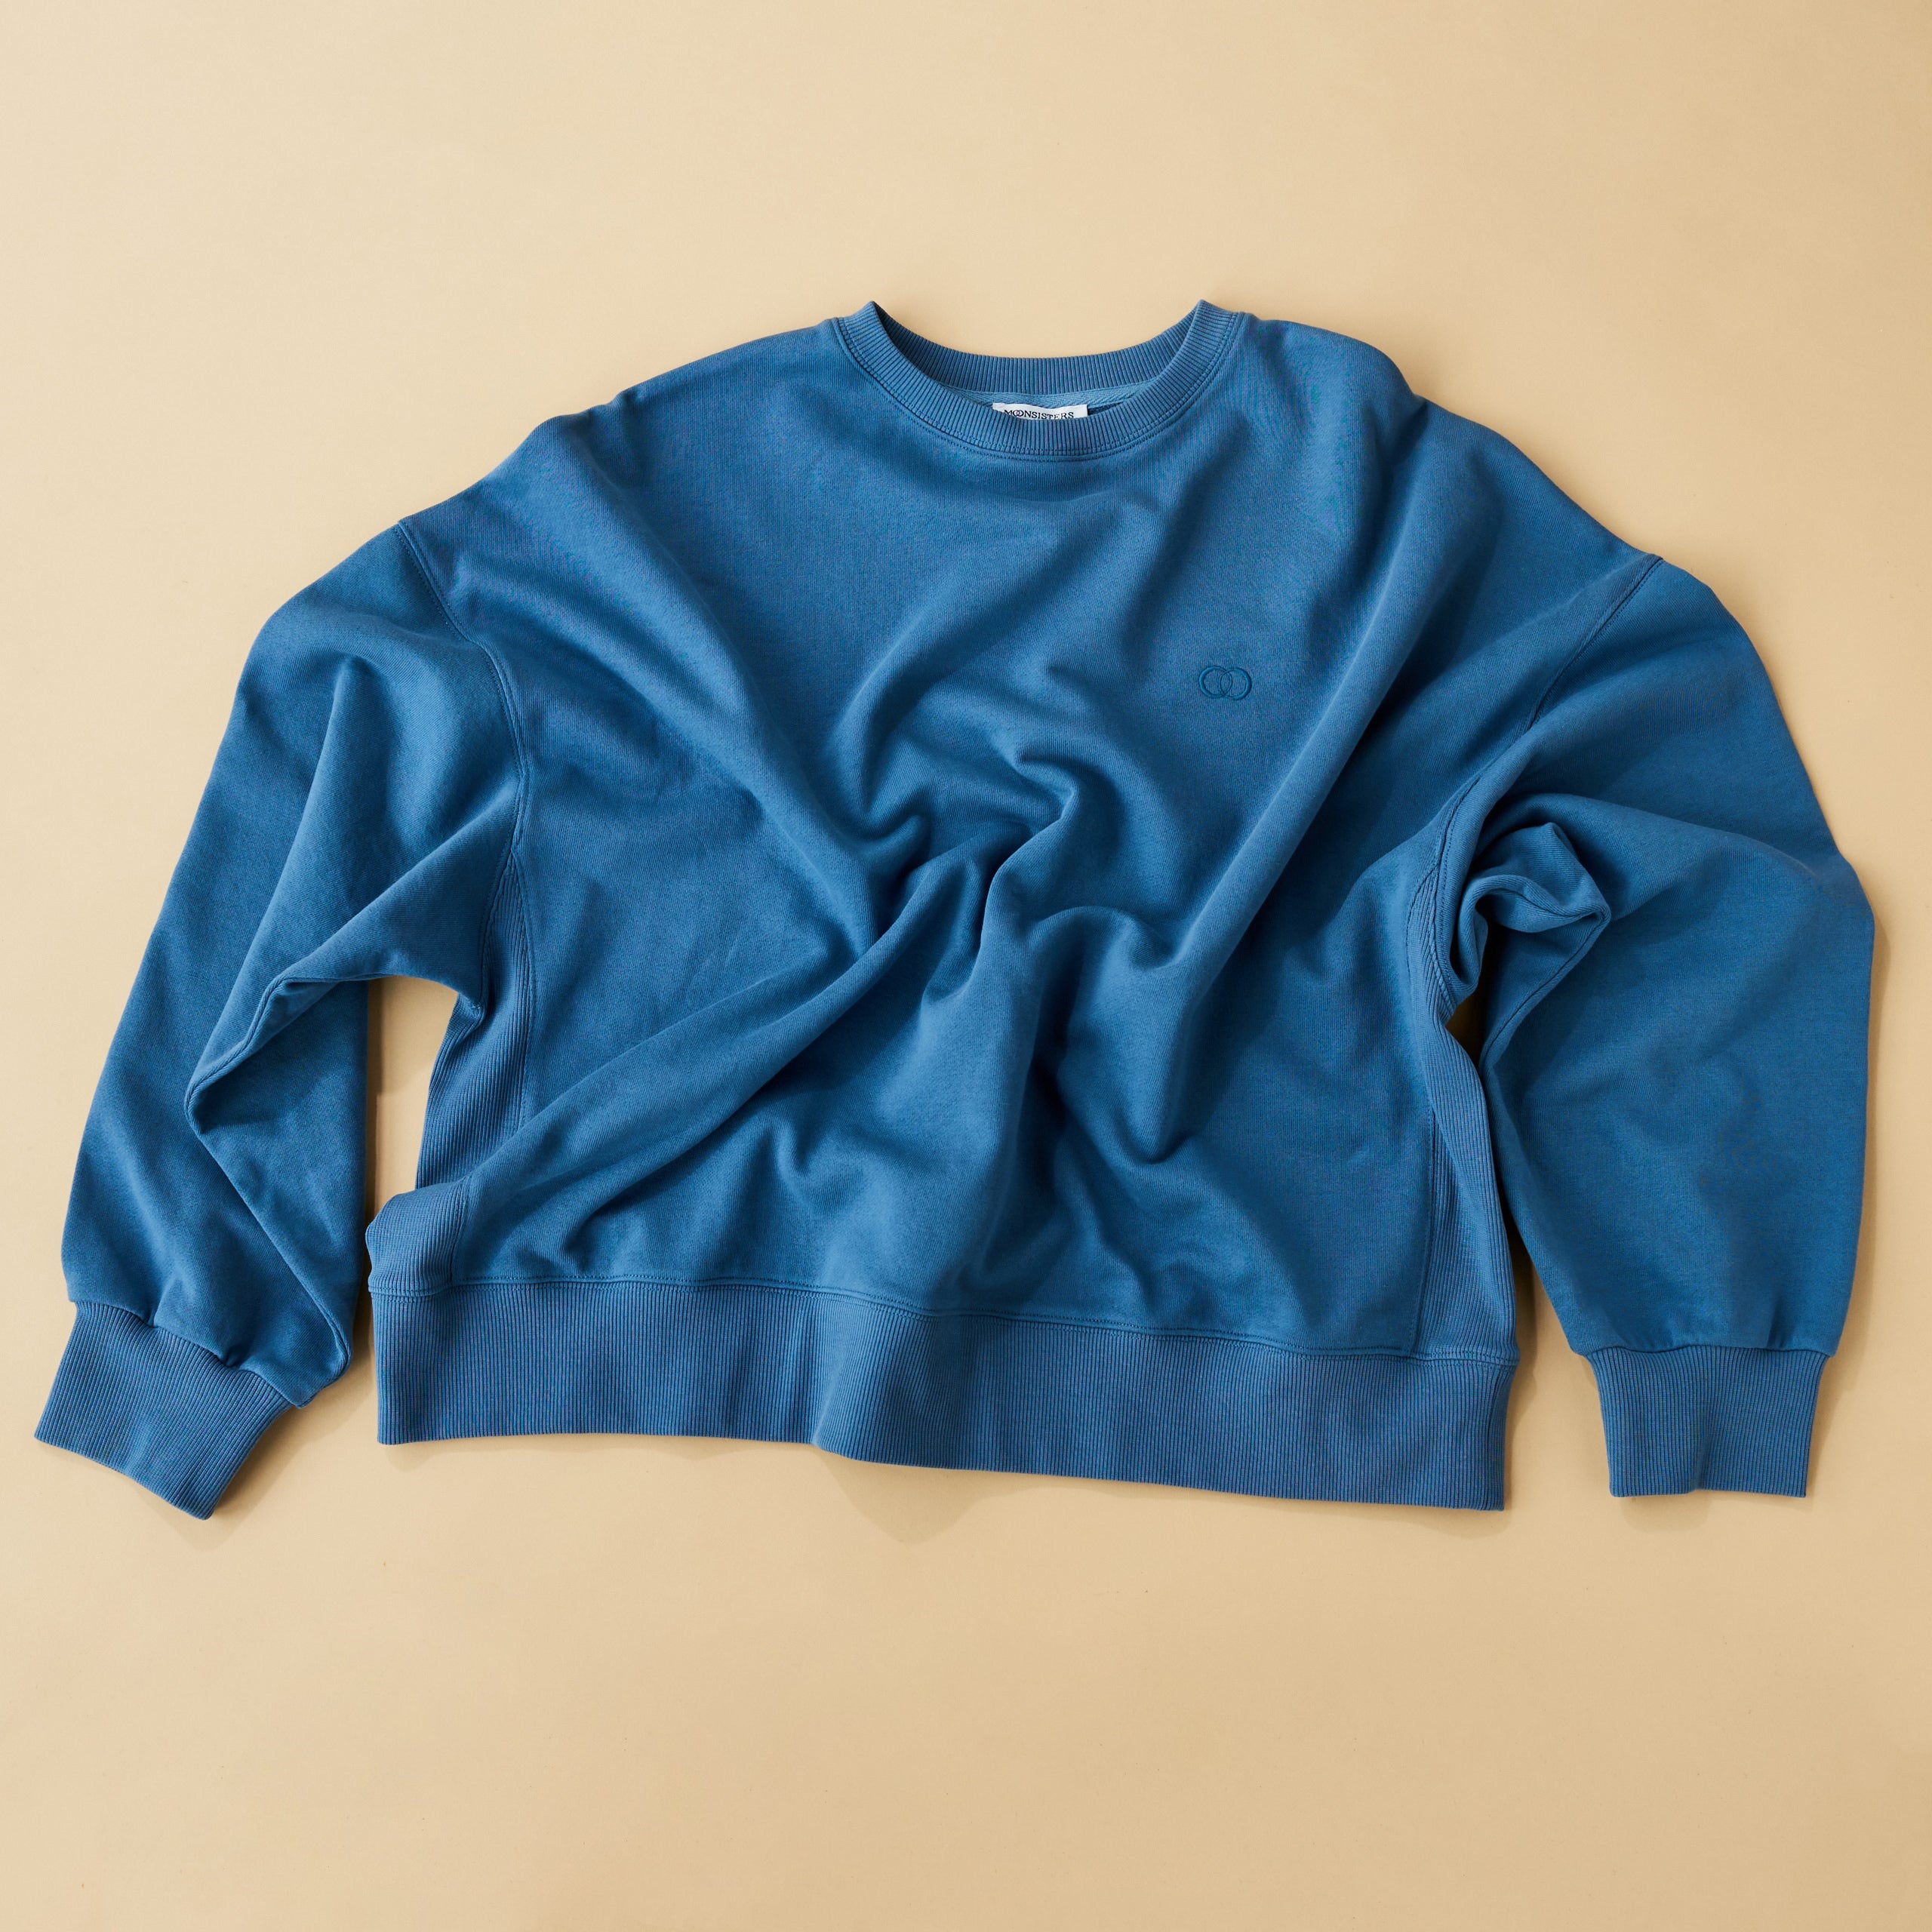 Supreme Sweater Blue Moon maat m/l